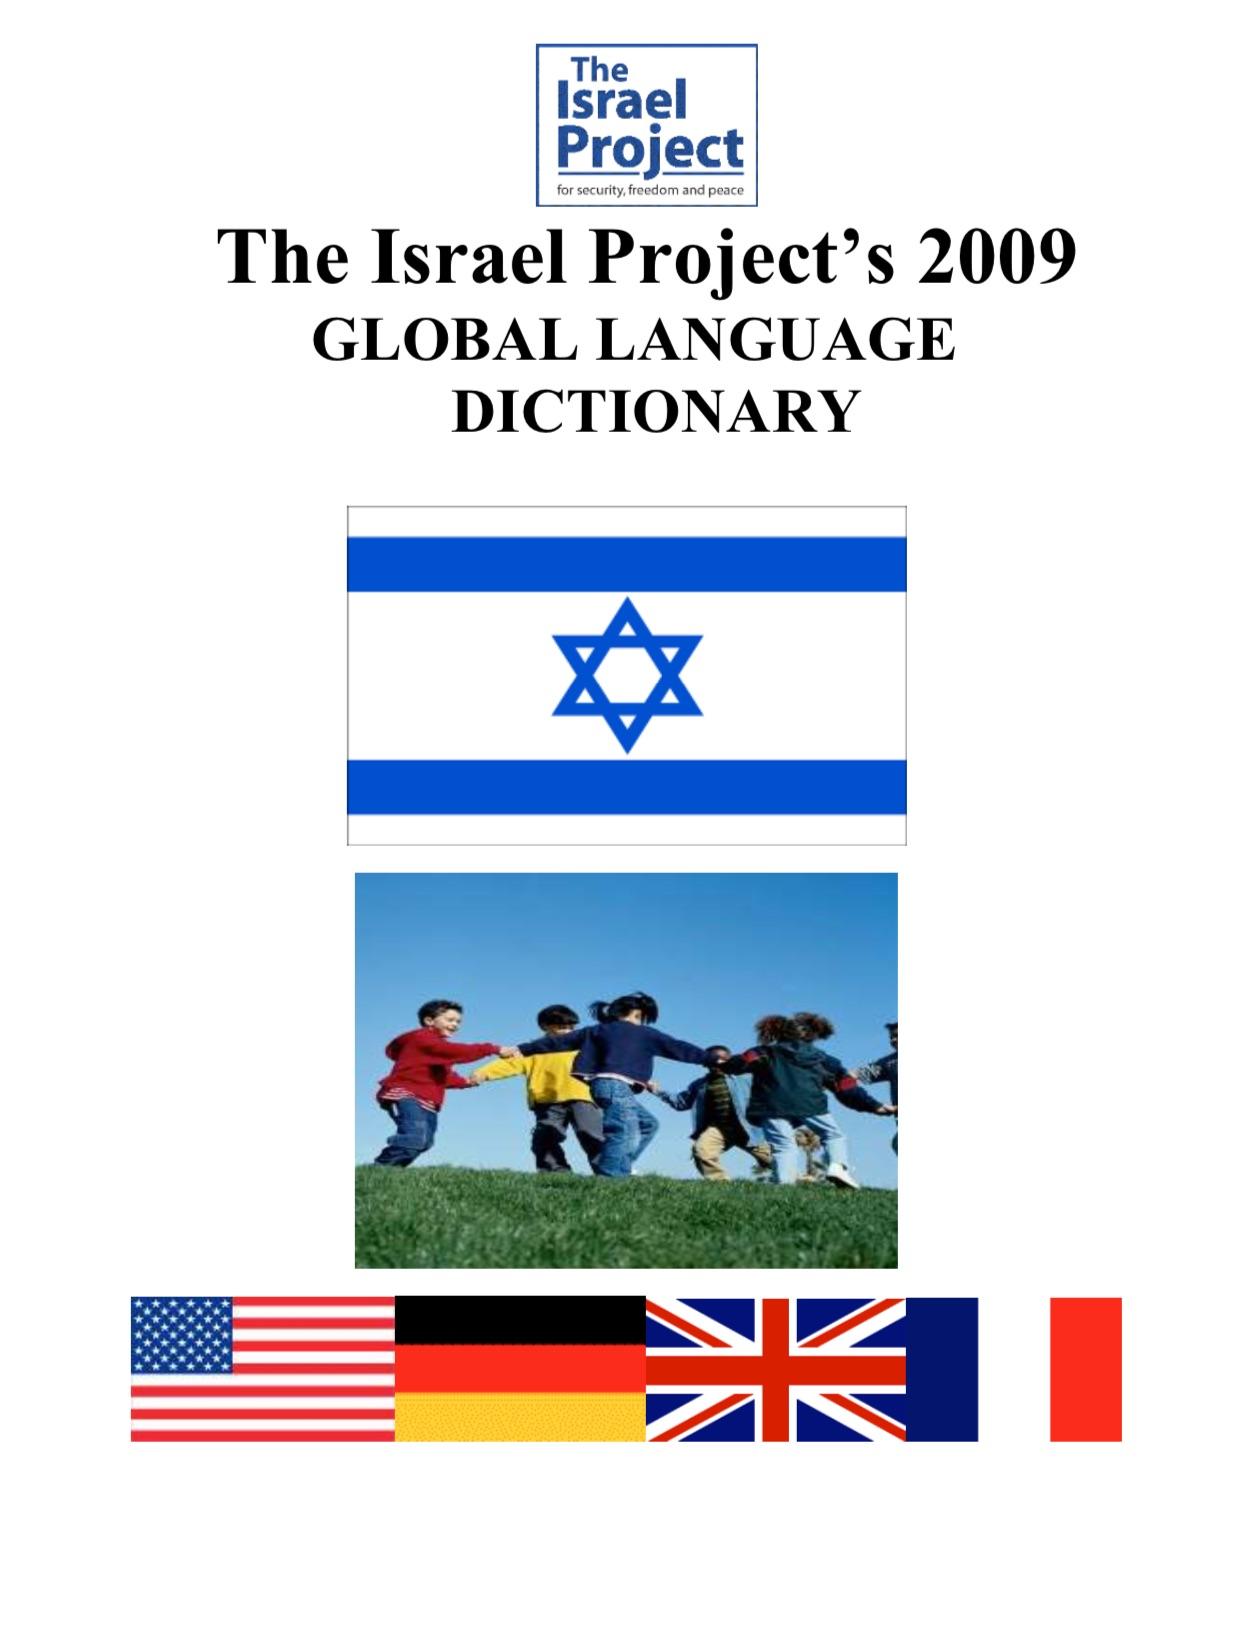 The Hasbara Handbook (2009) by The International Jews for Israel